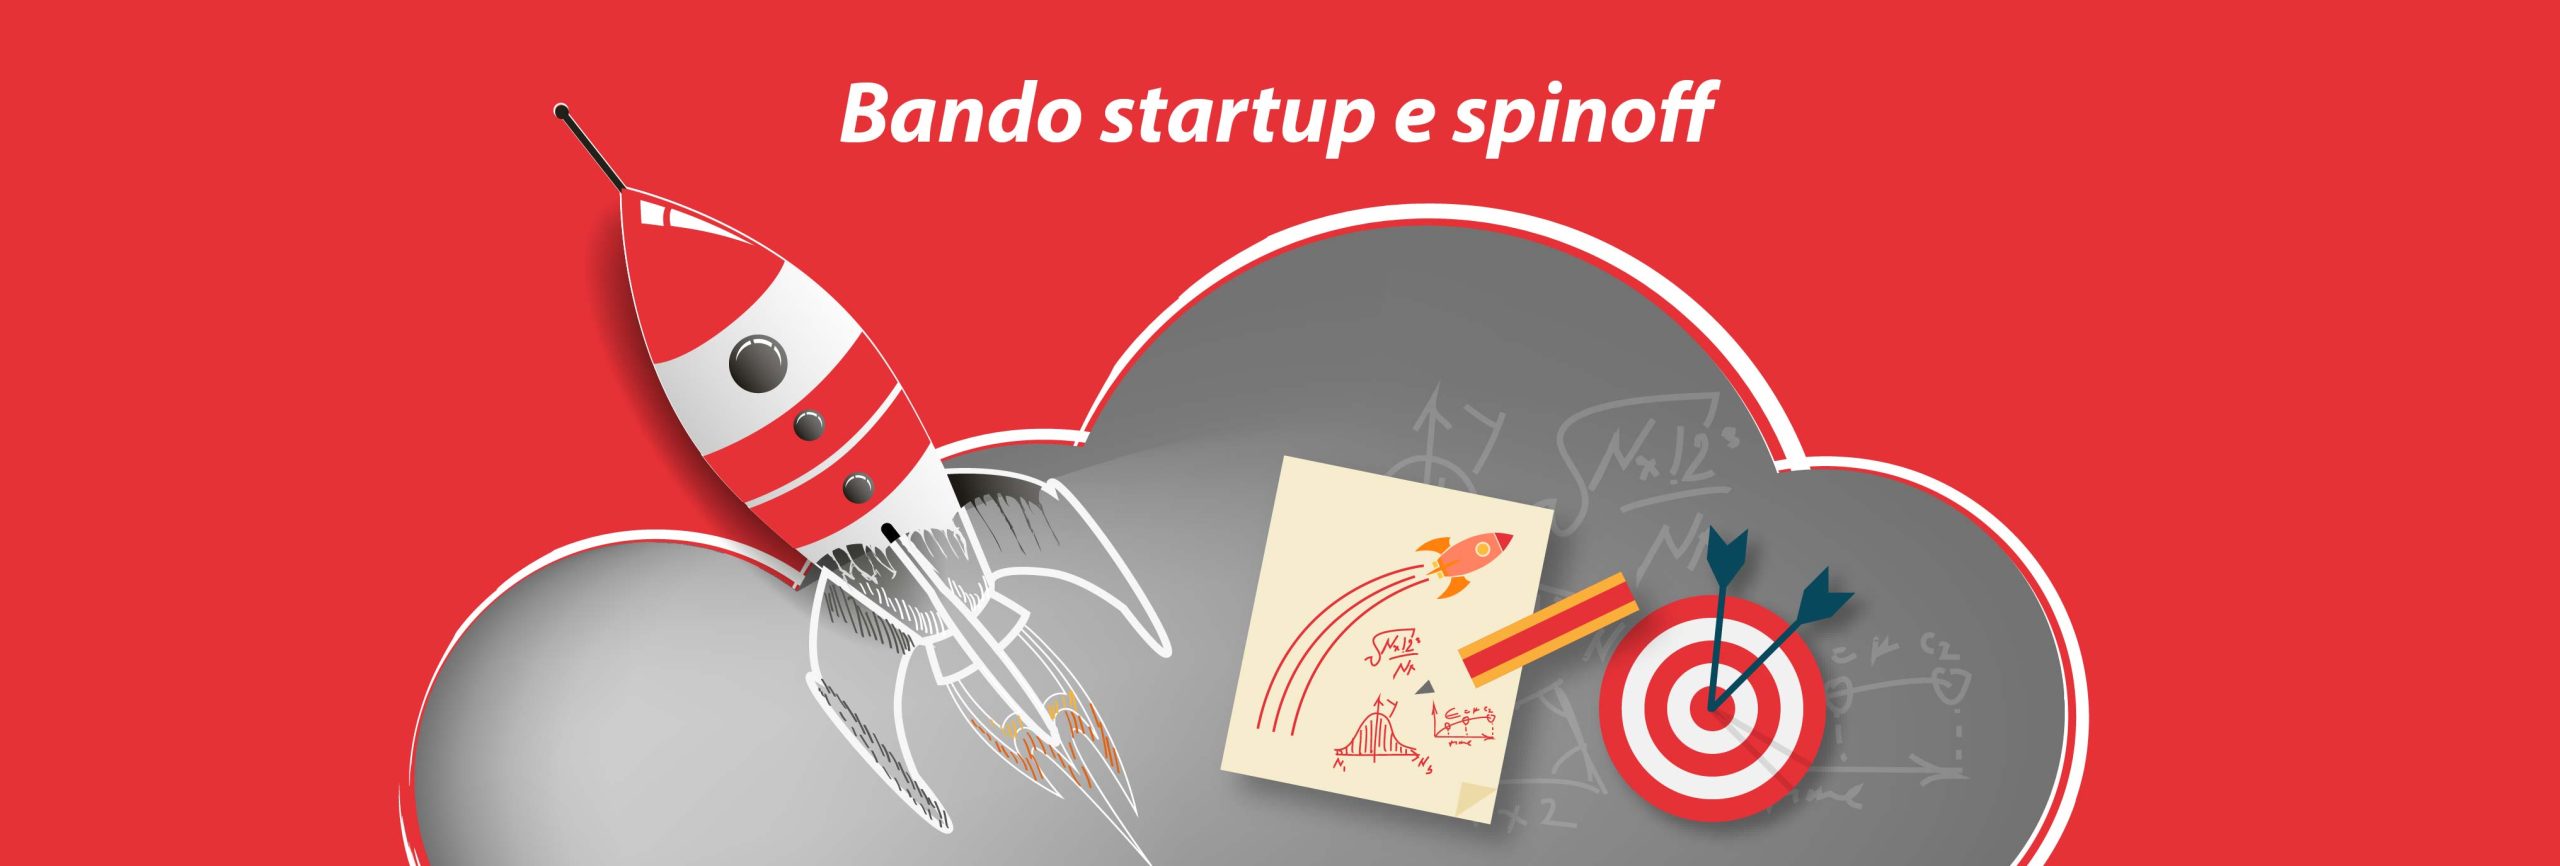 Bando startup e spinoff